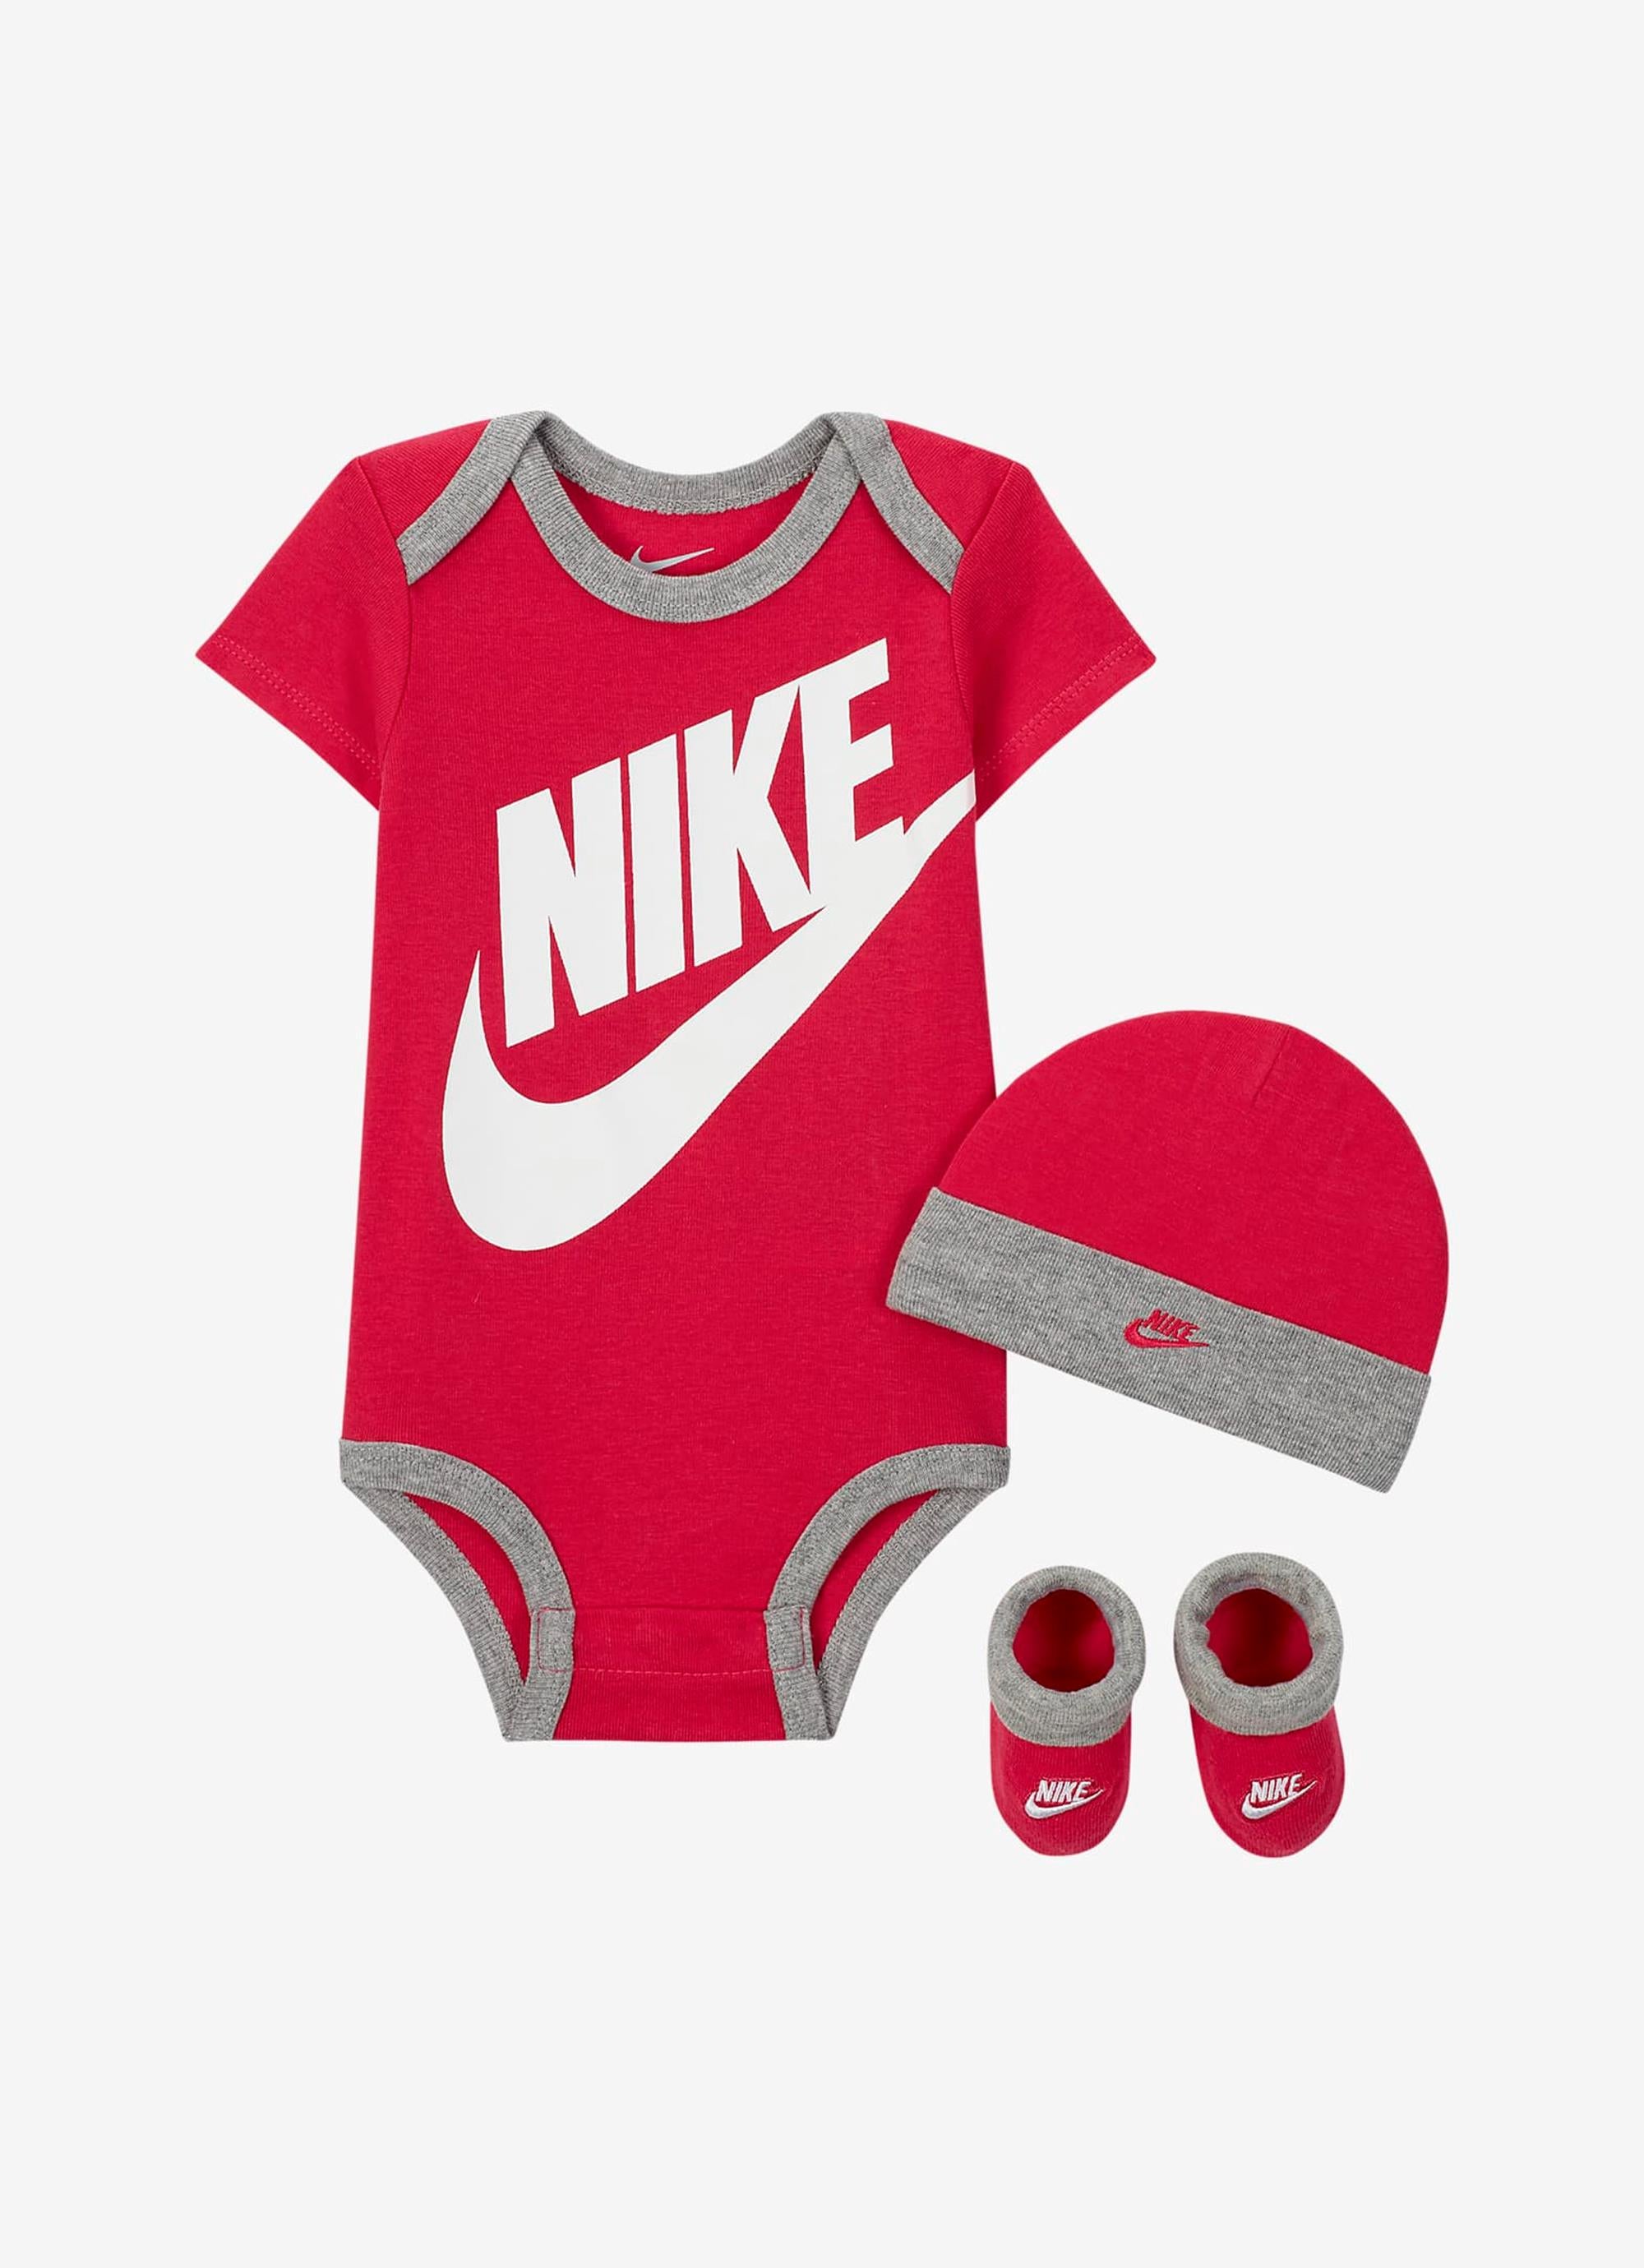 Top-Verkaufsförderung Nike Futura Bootie | Set 3pc in Hat/body Rat Pink Logo Infant Red - Suit